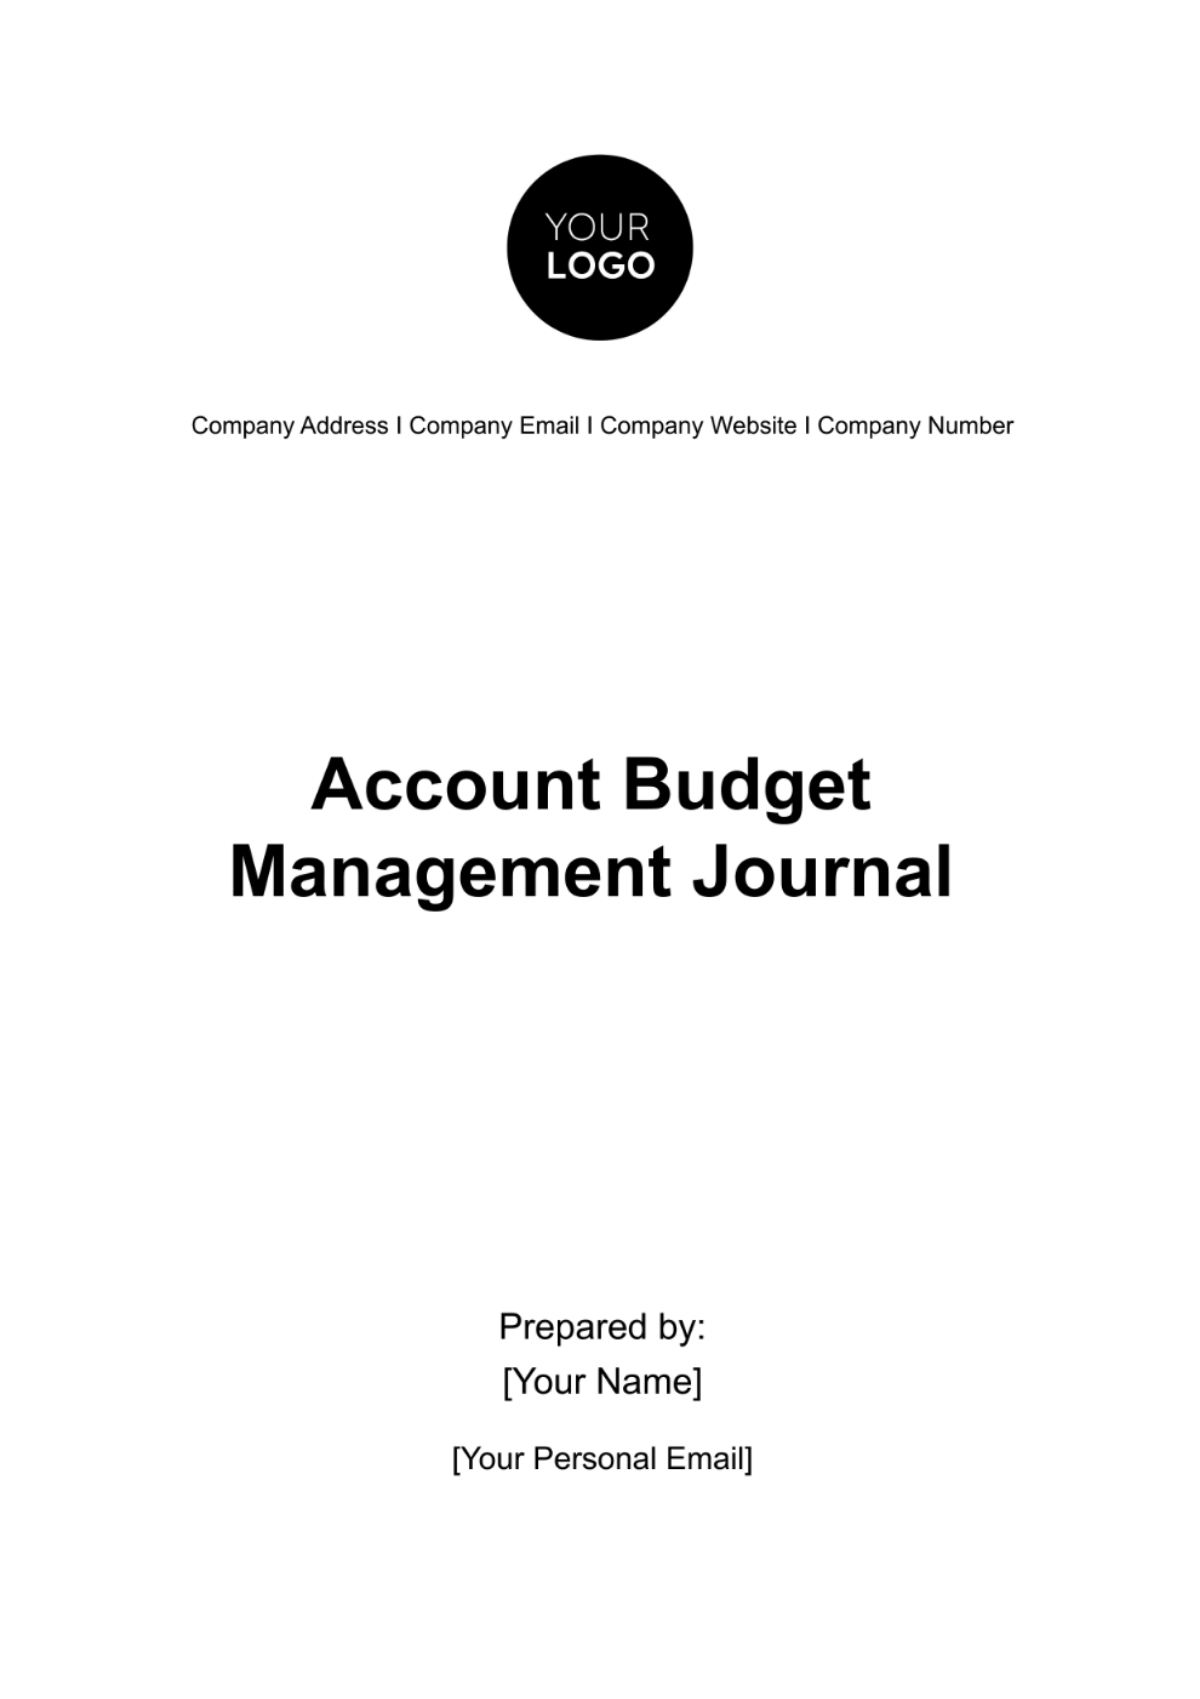 Account Budget Management Journal Template